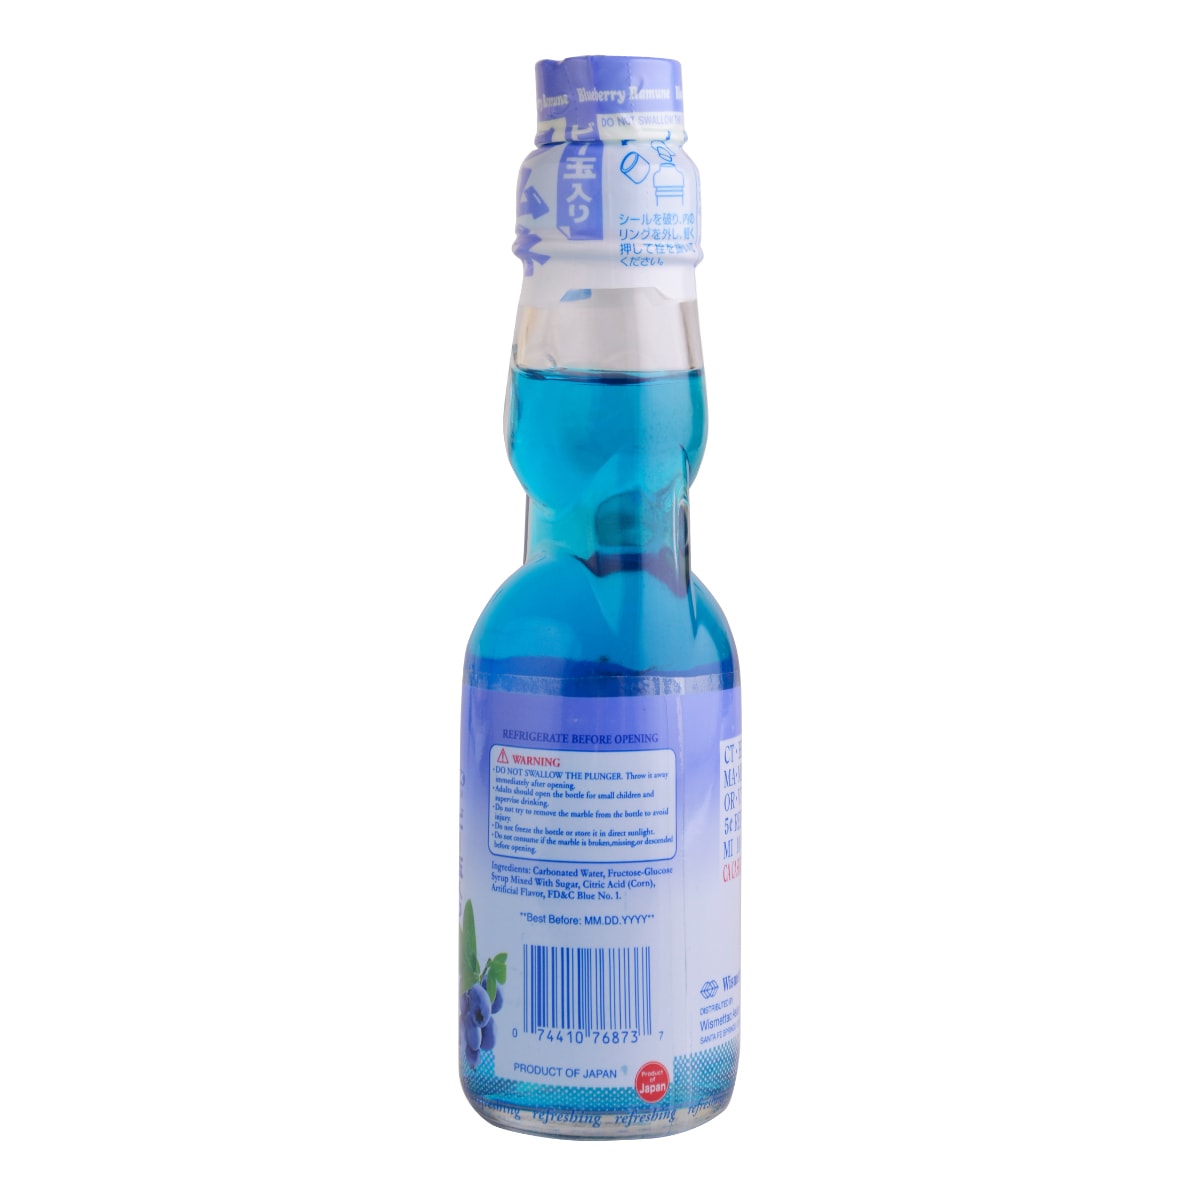 Shirakiku Carbonated Ramune Drink (Blueberry)